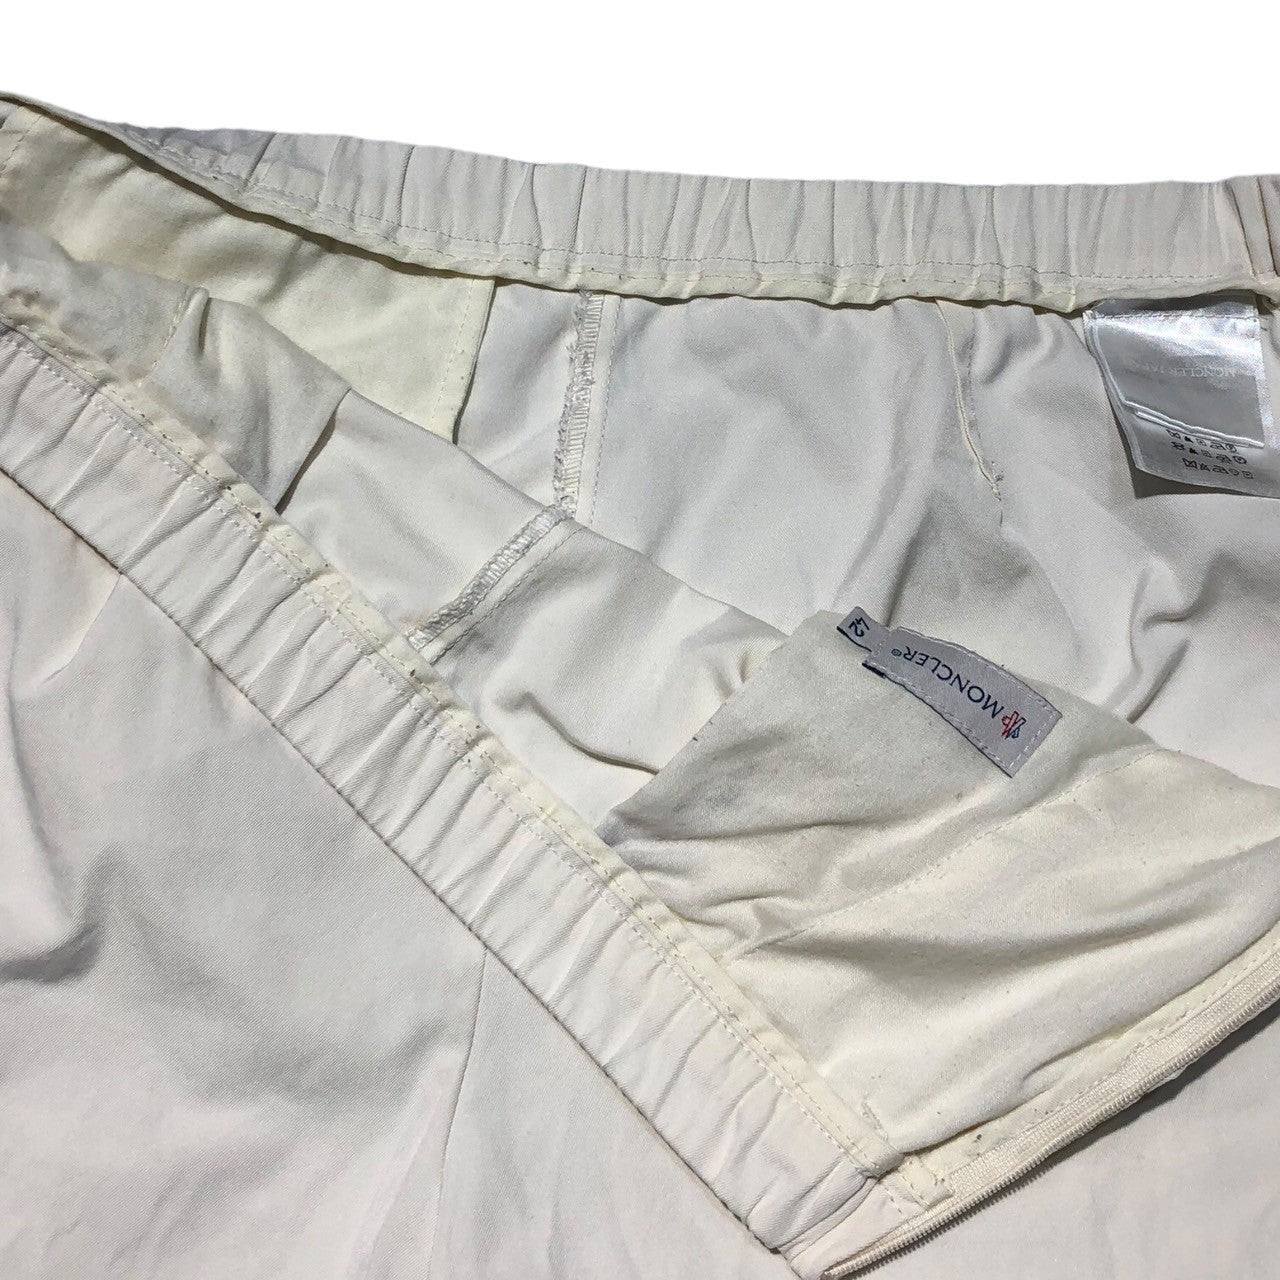 MONCLER(モンクレール) waist gathered shorts ウエスト ギャザー ハーフ パンツ ZIND1305759 42(XL程度) ホワイト